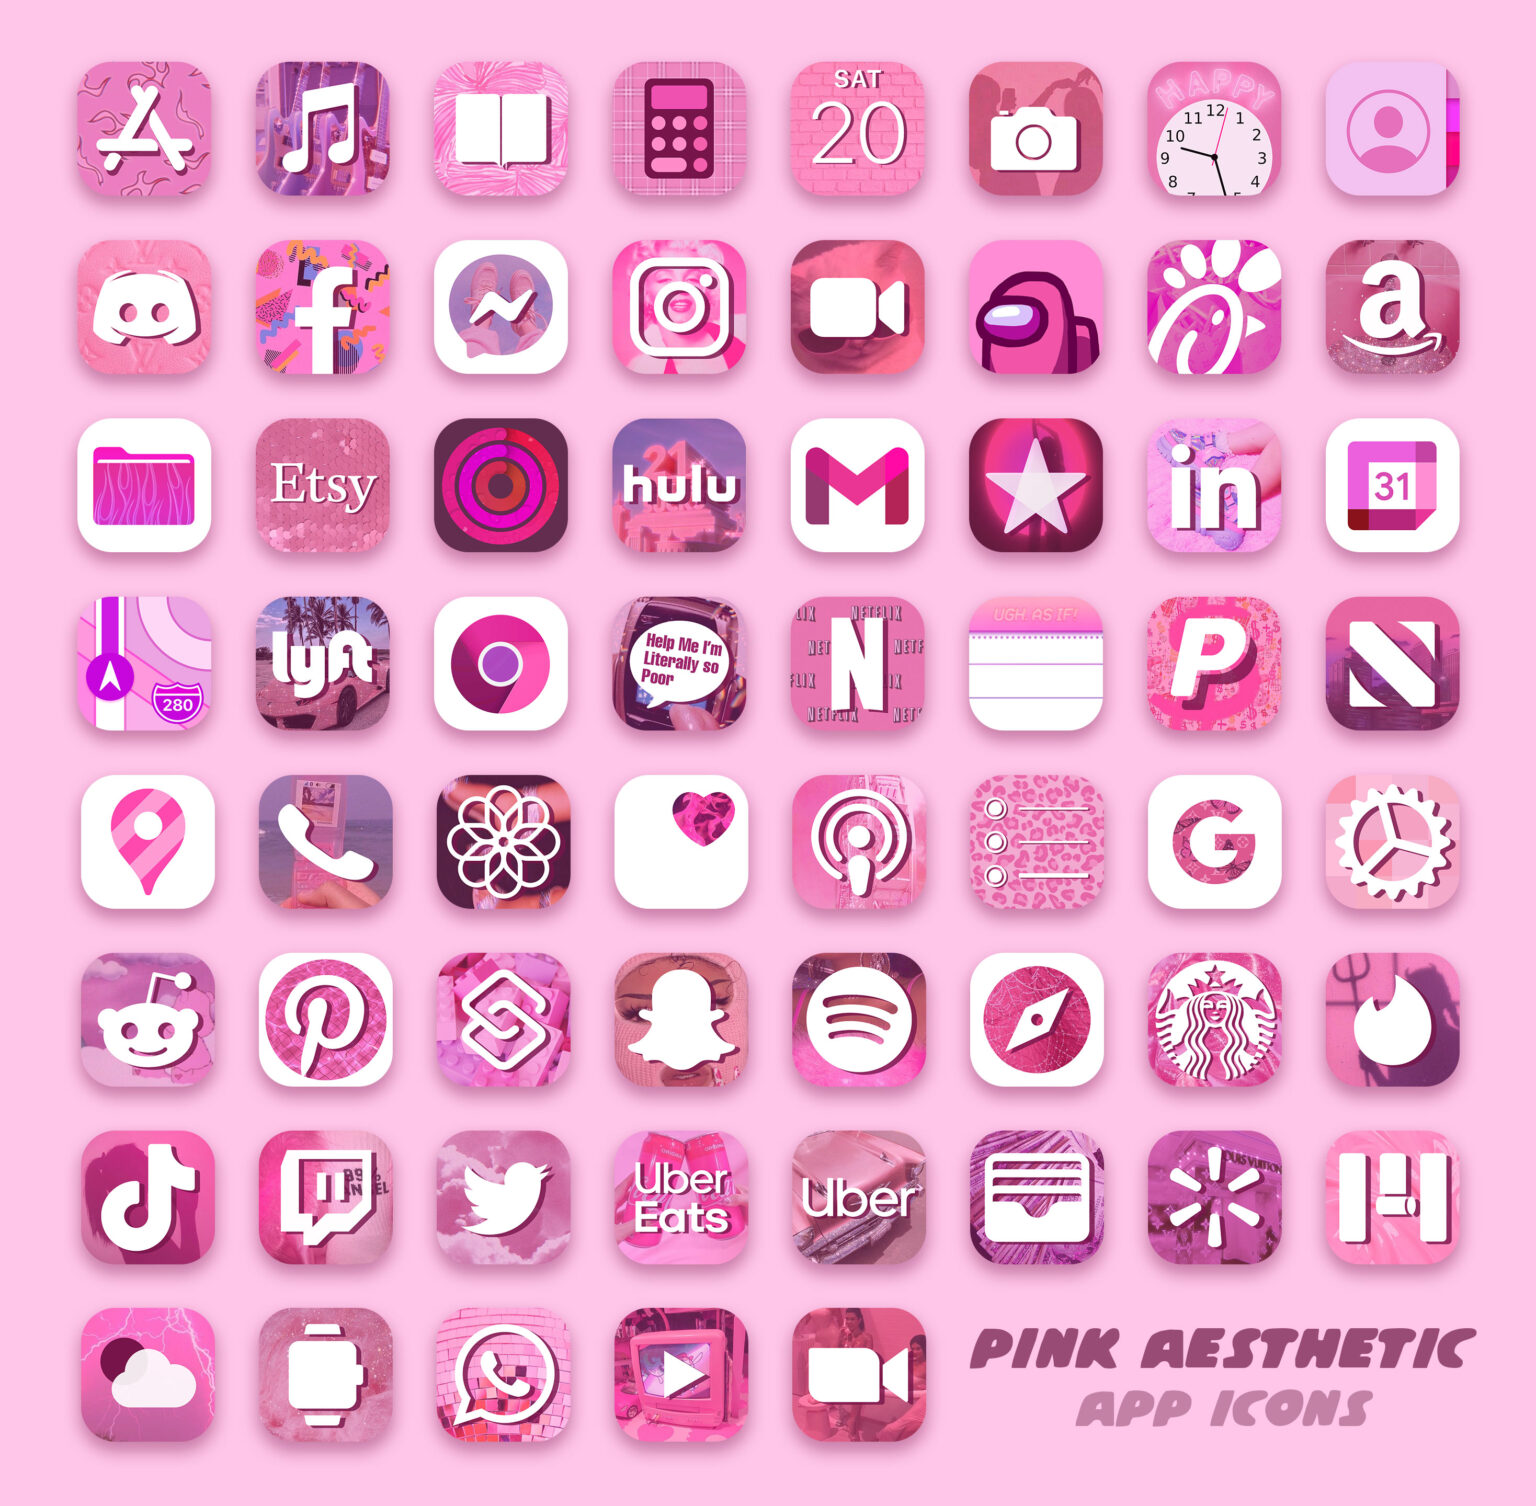 pinterest logo pink